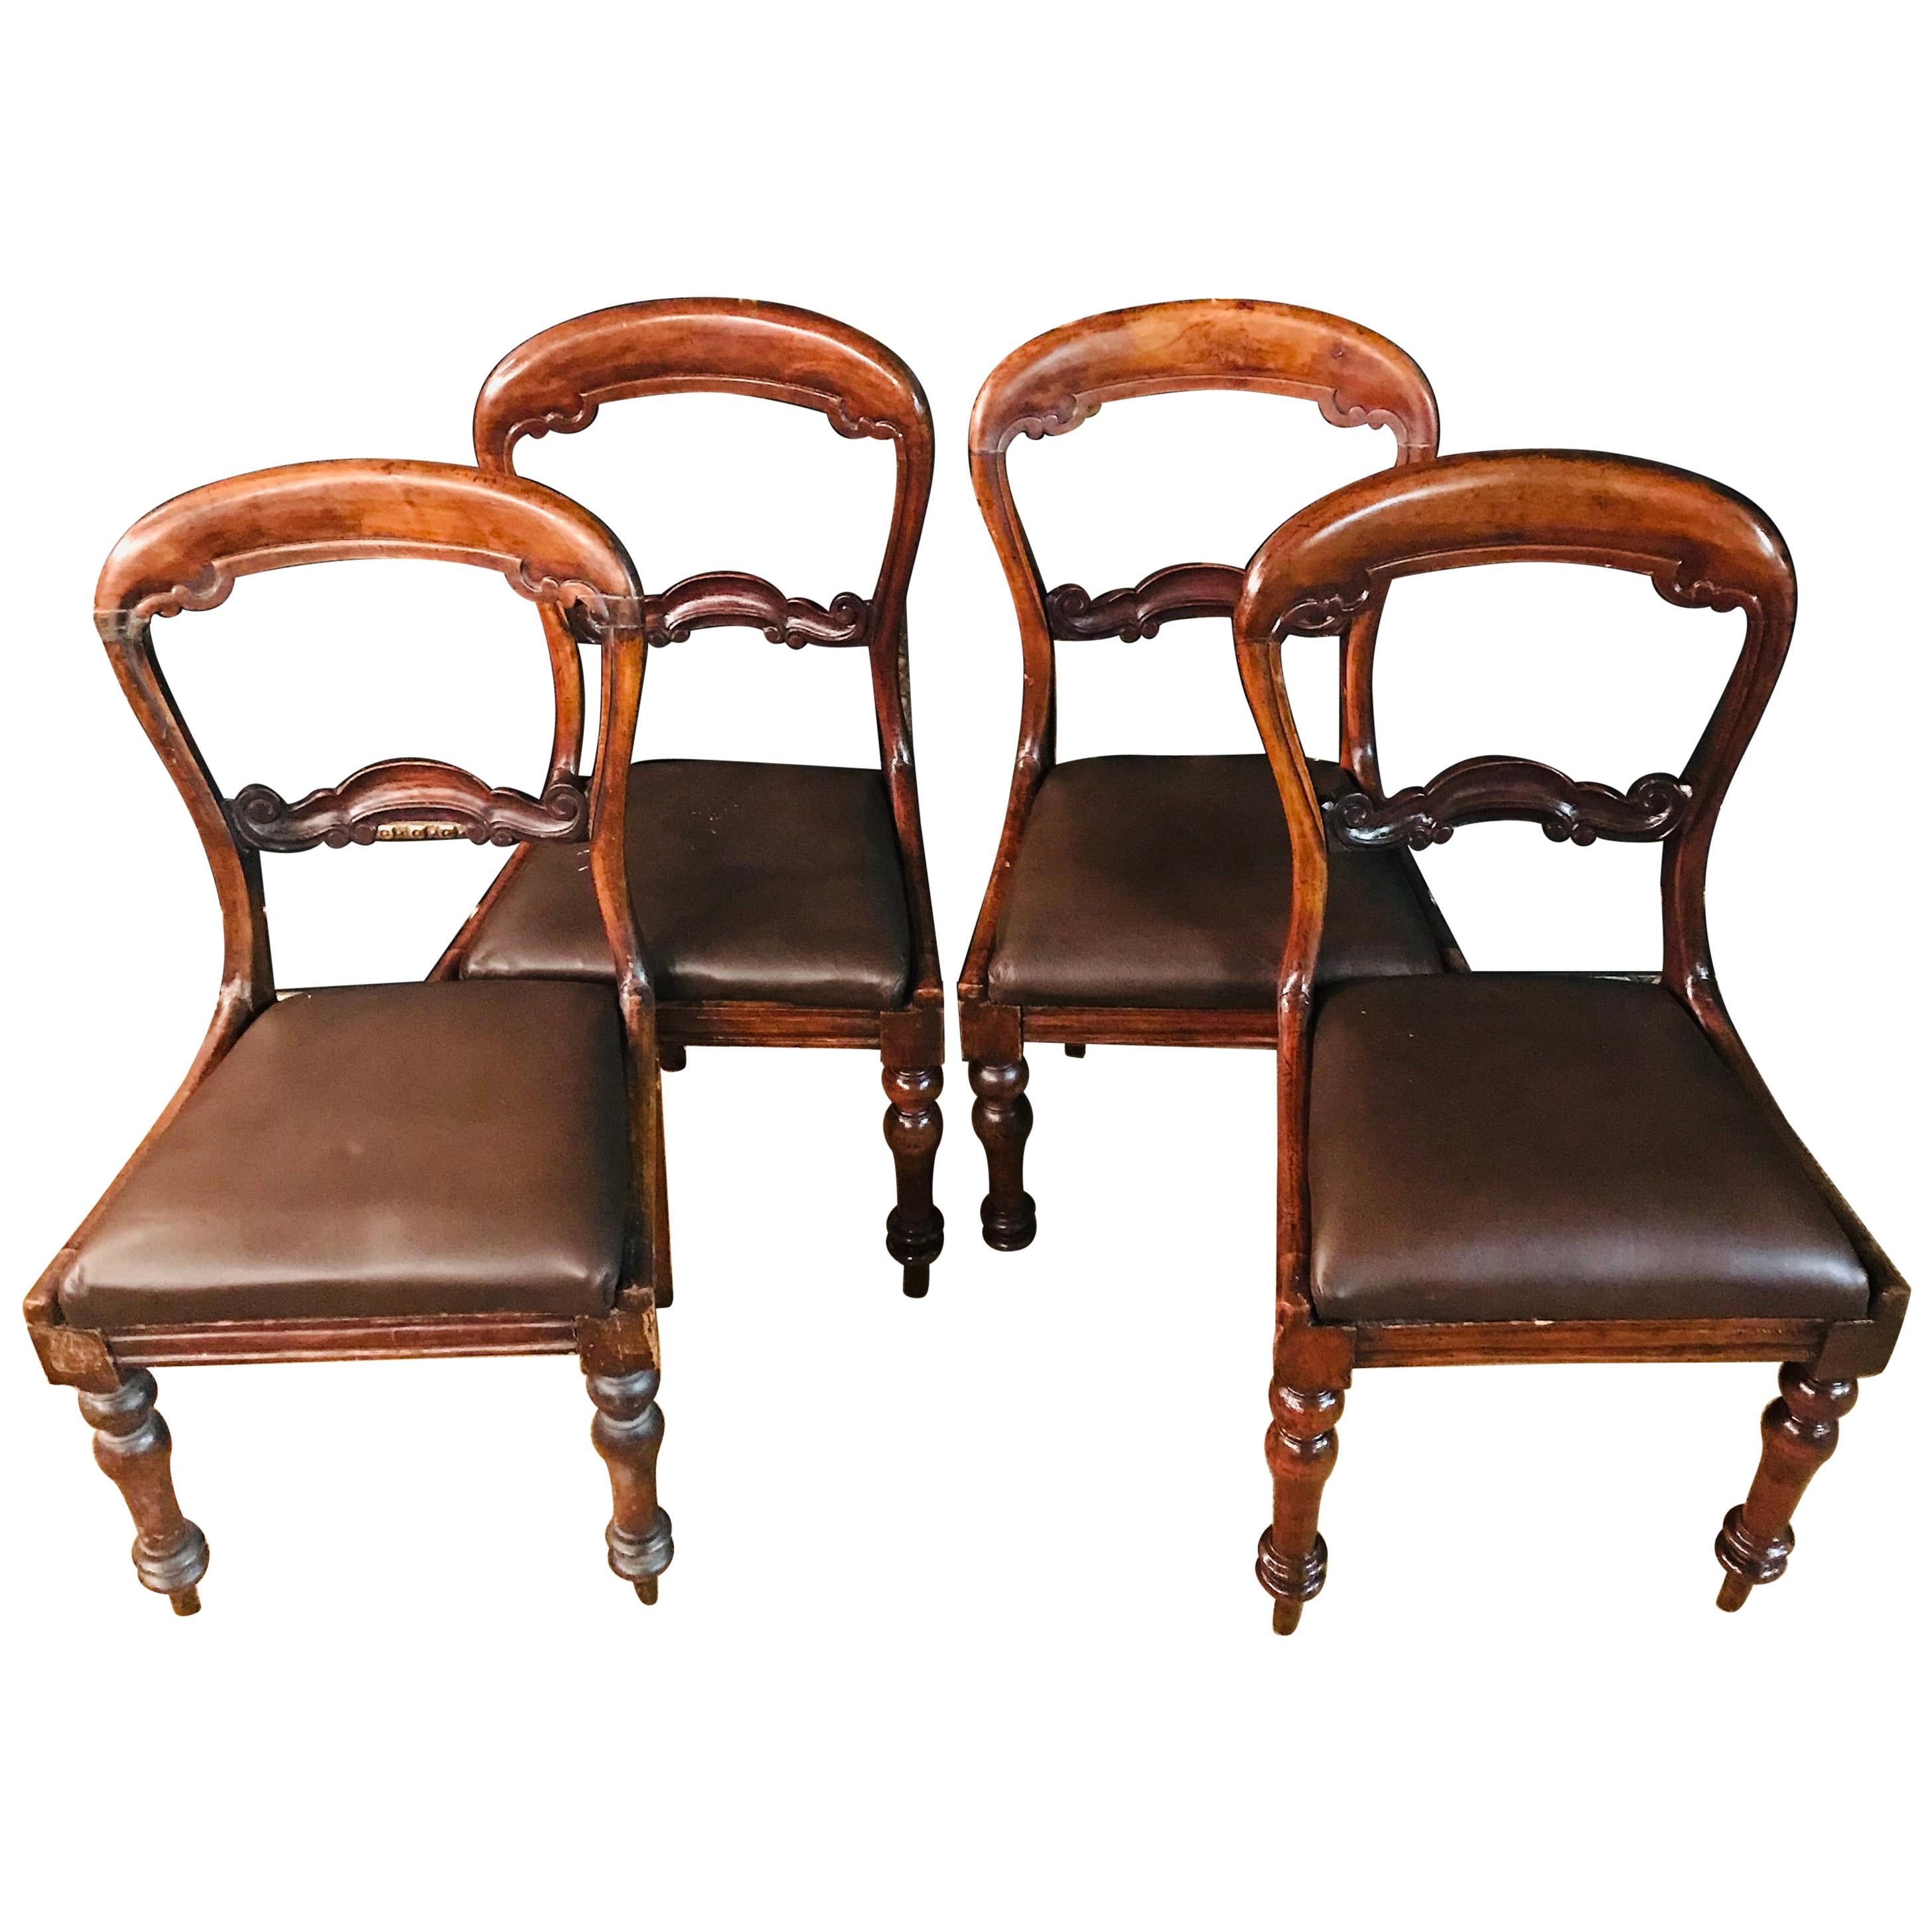 4 originale Biedermeier-Stühle aus massivem Mahagoni, um 1840